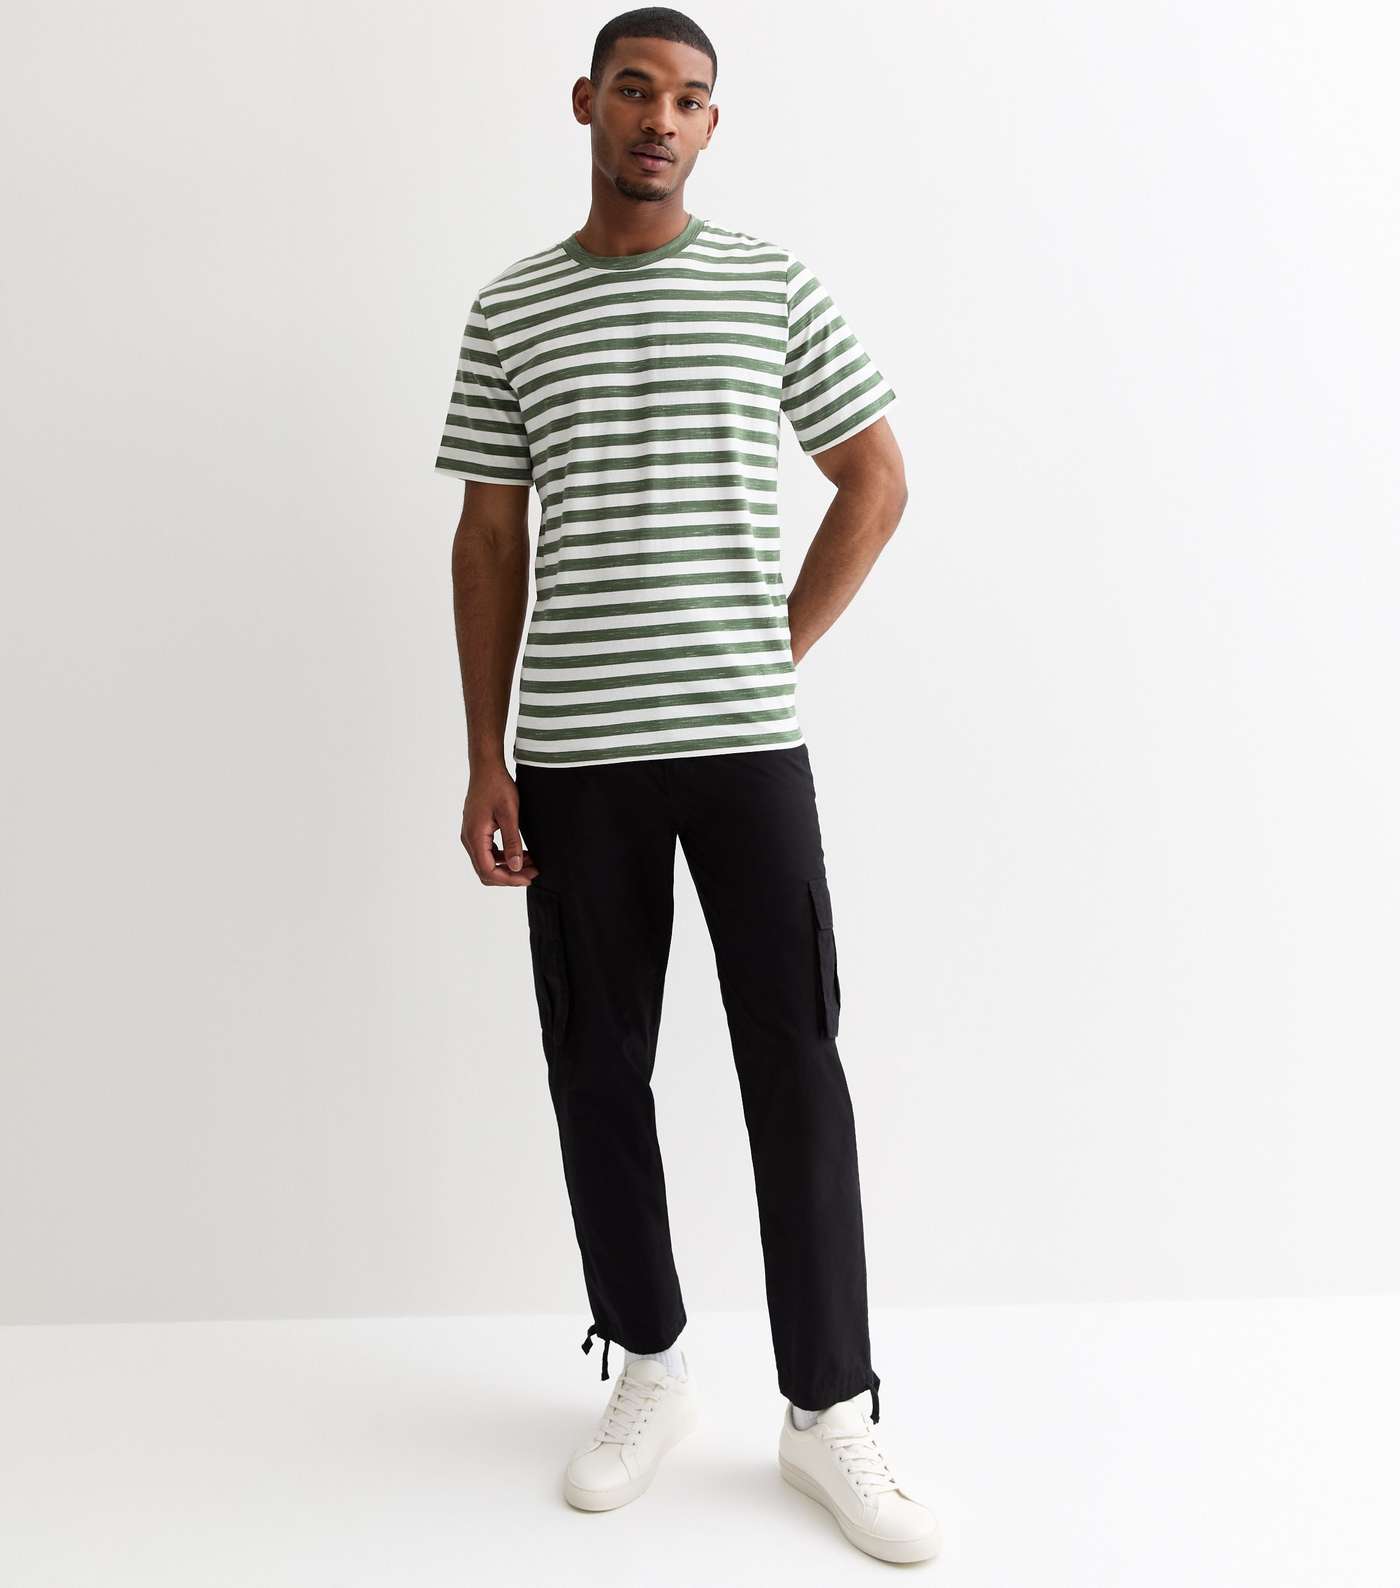 Jack & Jones Green Stripe T-Shirt Image 3